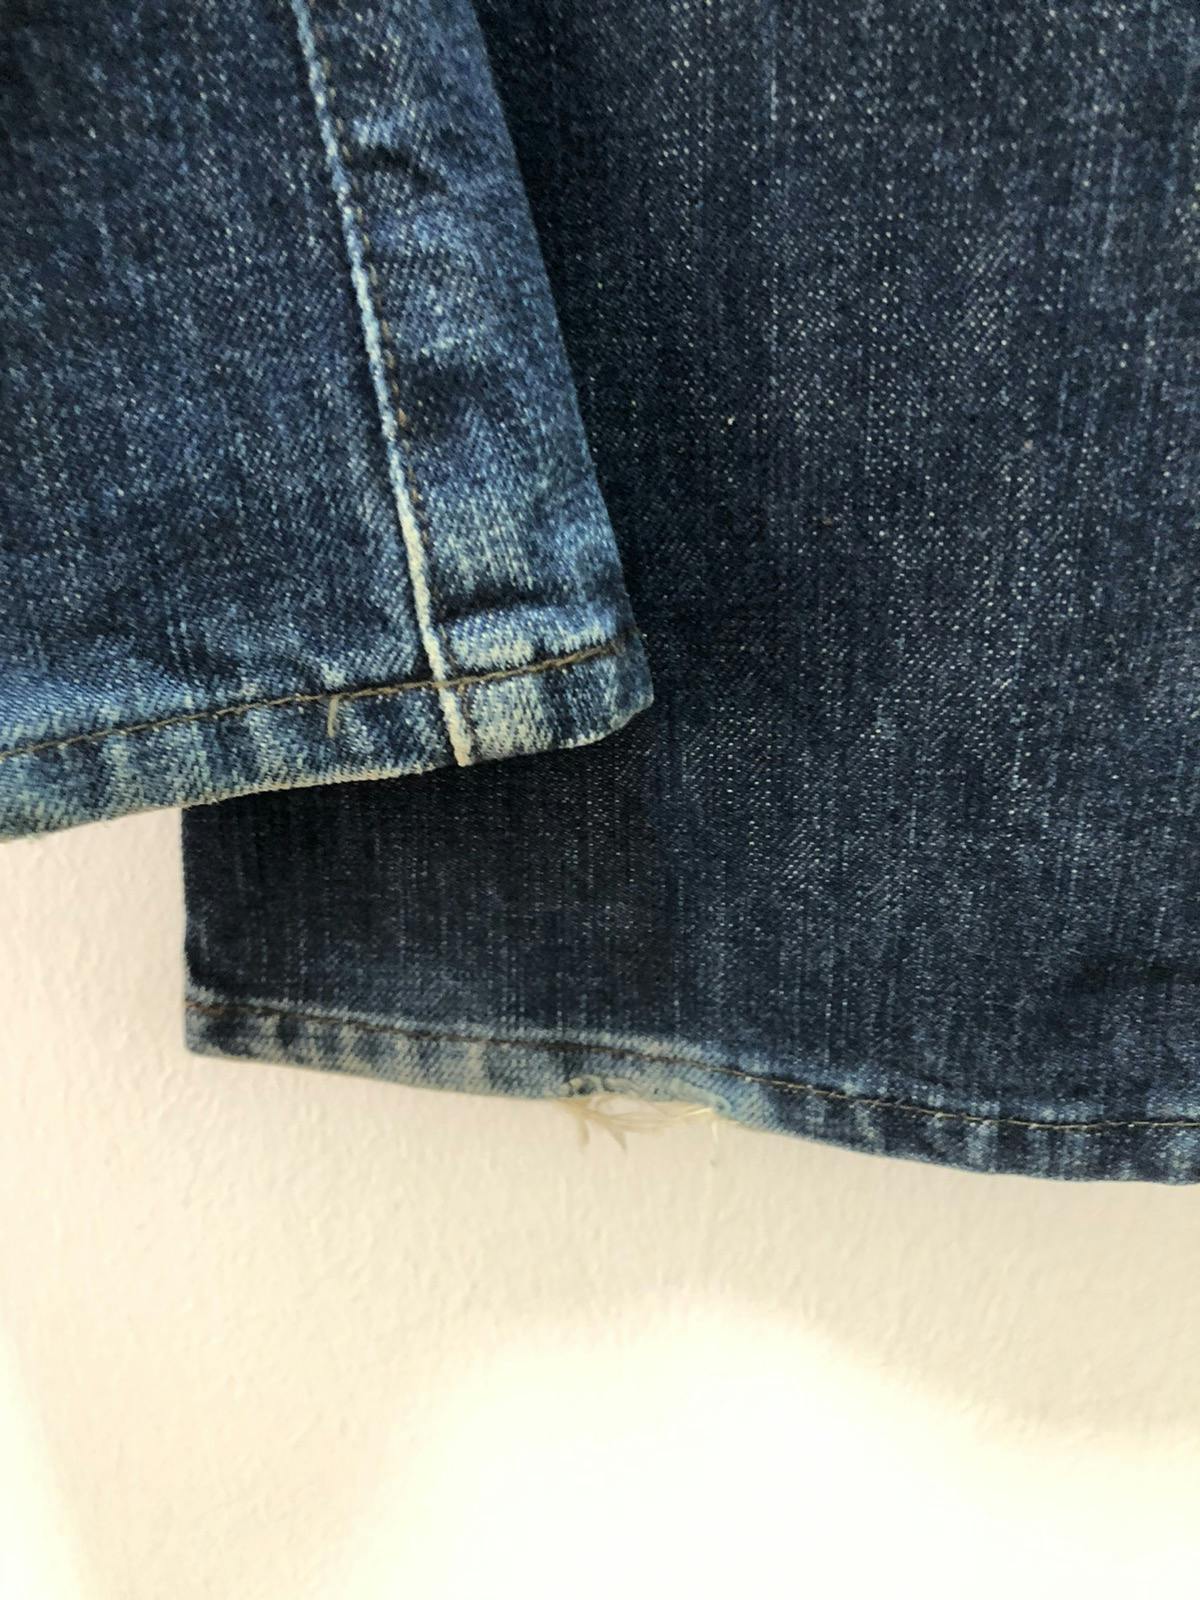 LAD MUSICIAN Denim Pants Jeans Wear 42 Japan Made - 5